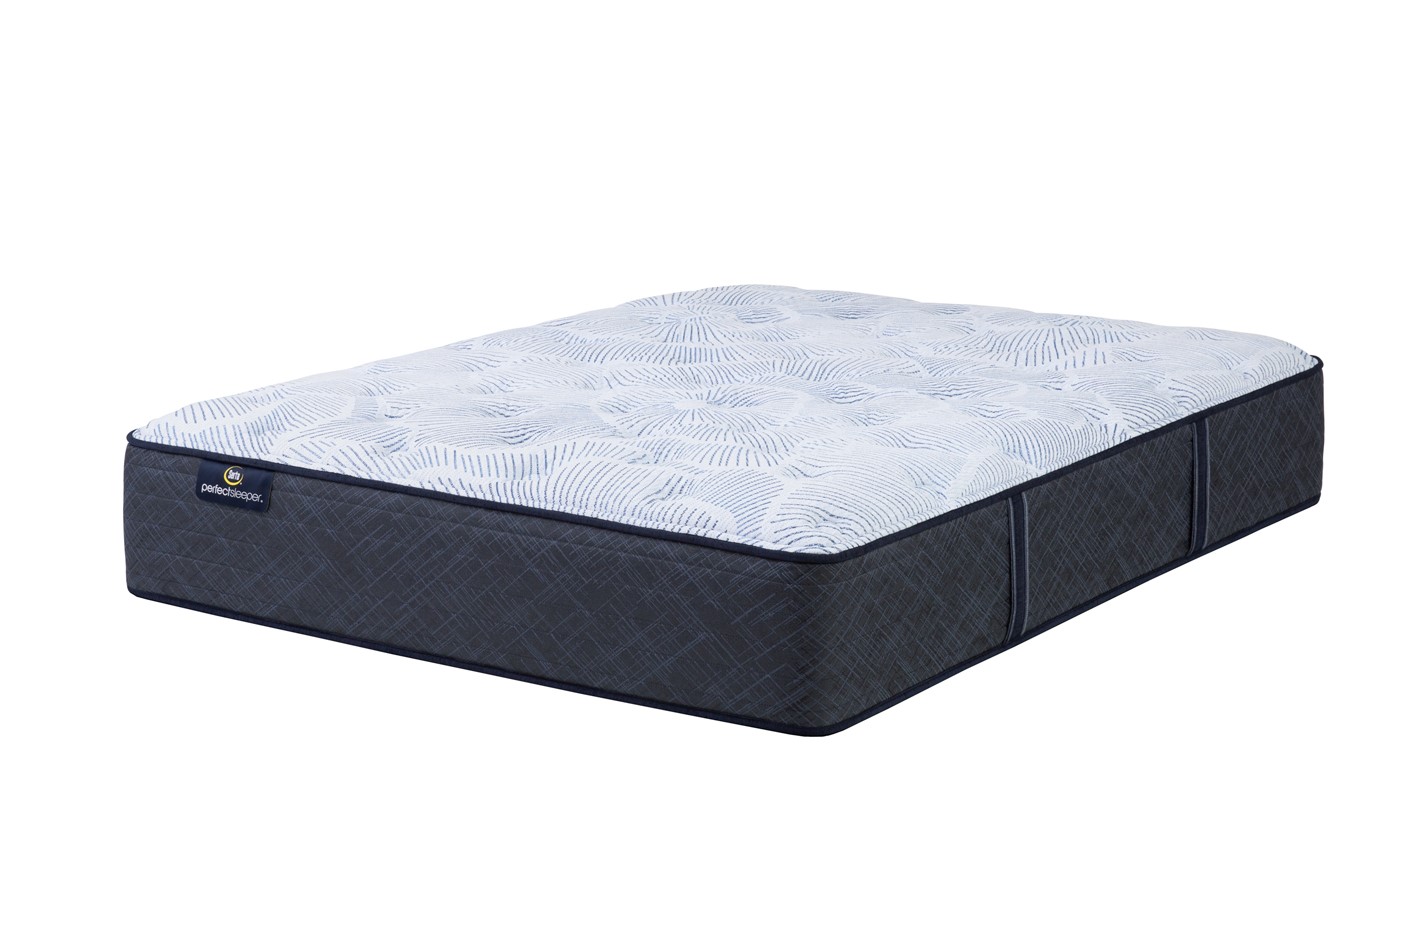 Photo of the Serta Perfect Sleeper Blue Lagoon Nights Plush mattress.